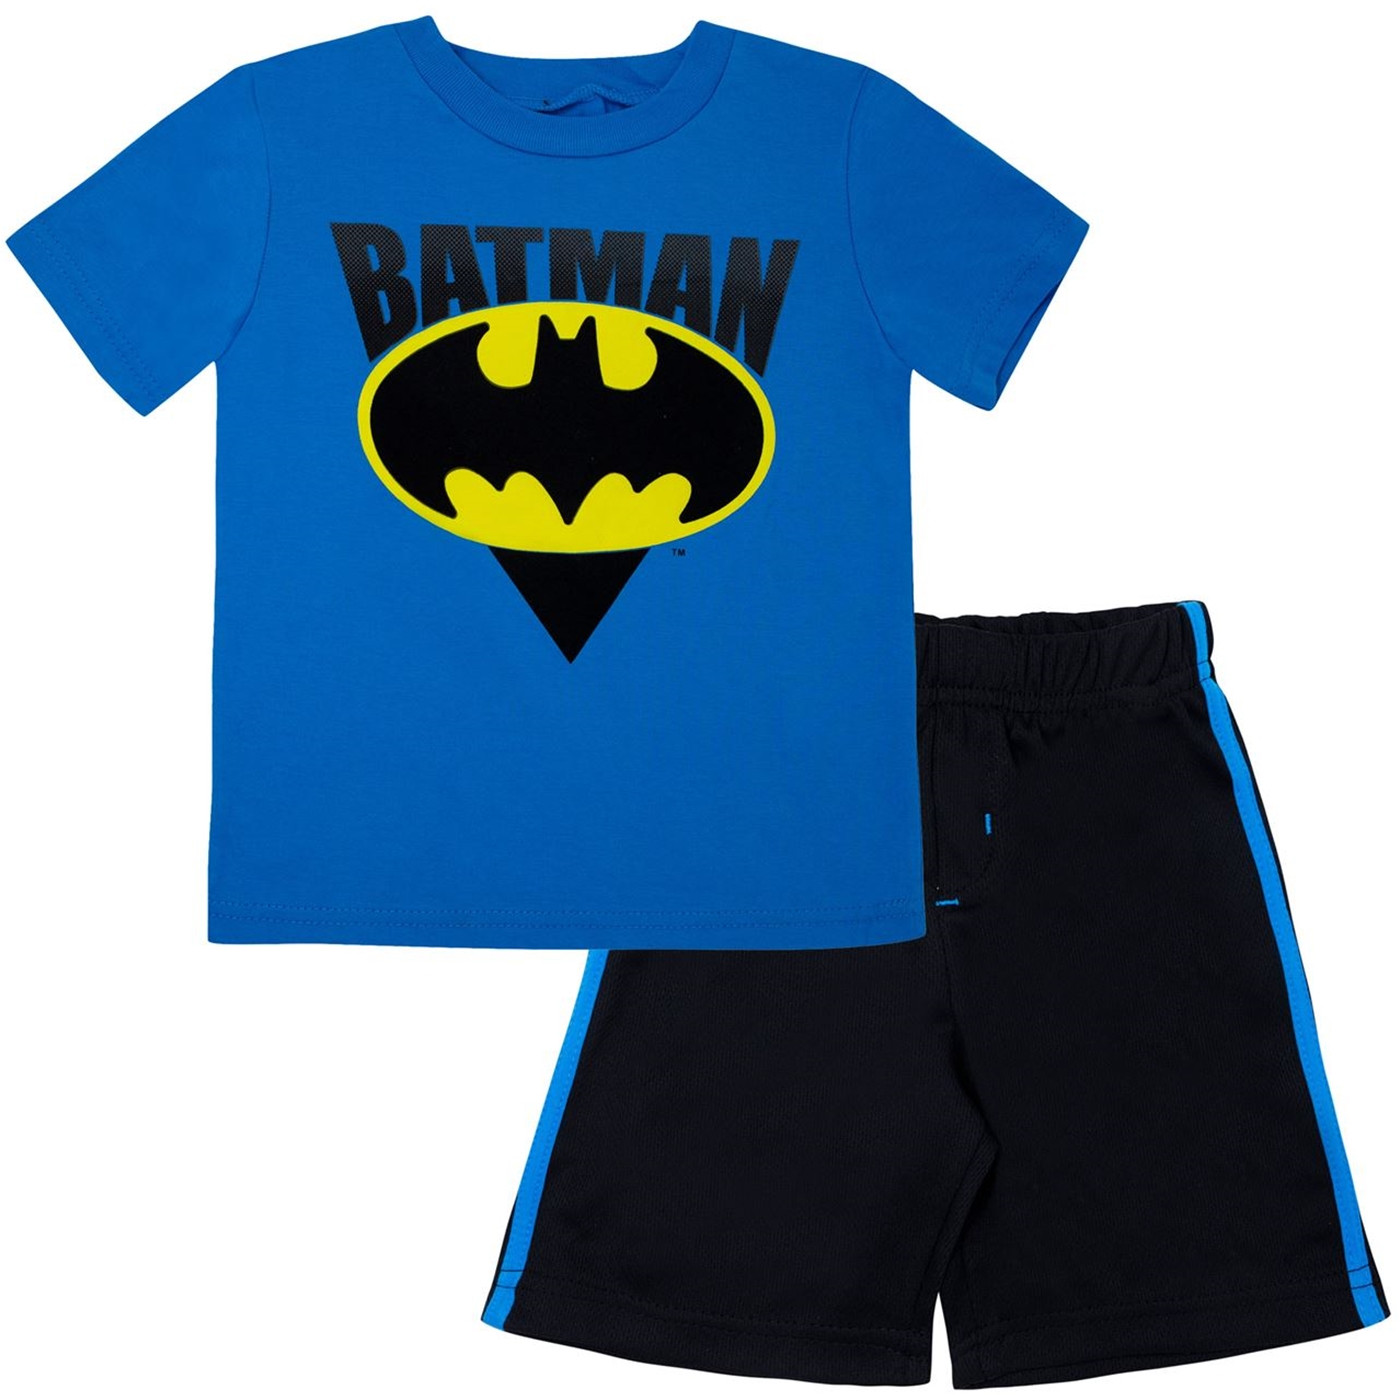 Batman Mesh Toddler Short Set